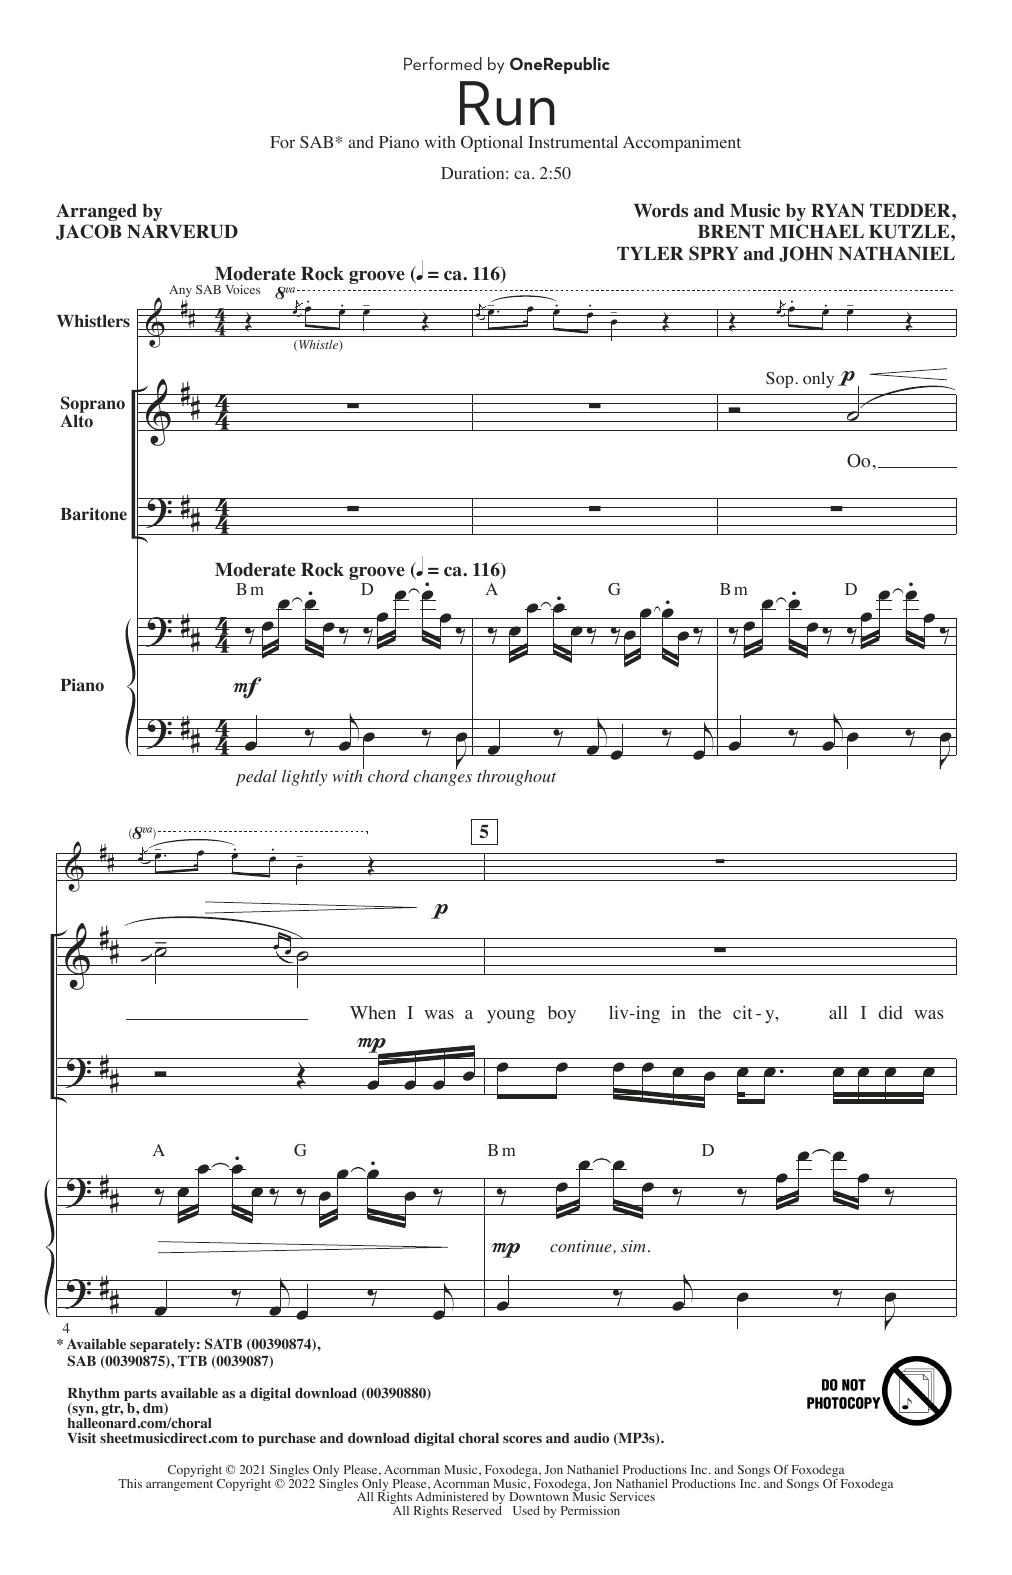 OneRepublic Run (arr. Jacob Narverud) Sheet Music Notes & Chords for TBB Choir - Download or Print PDF